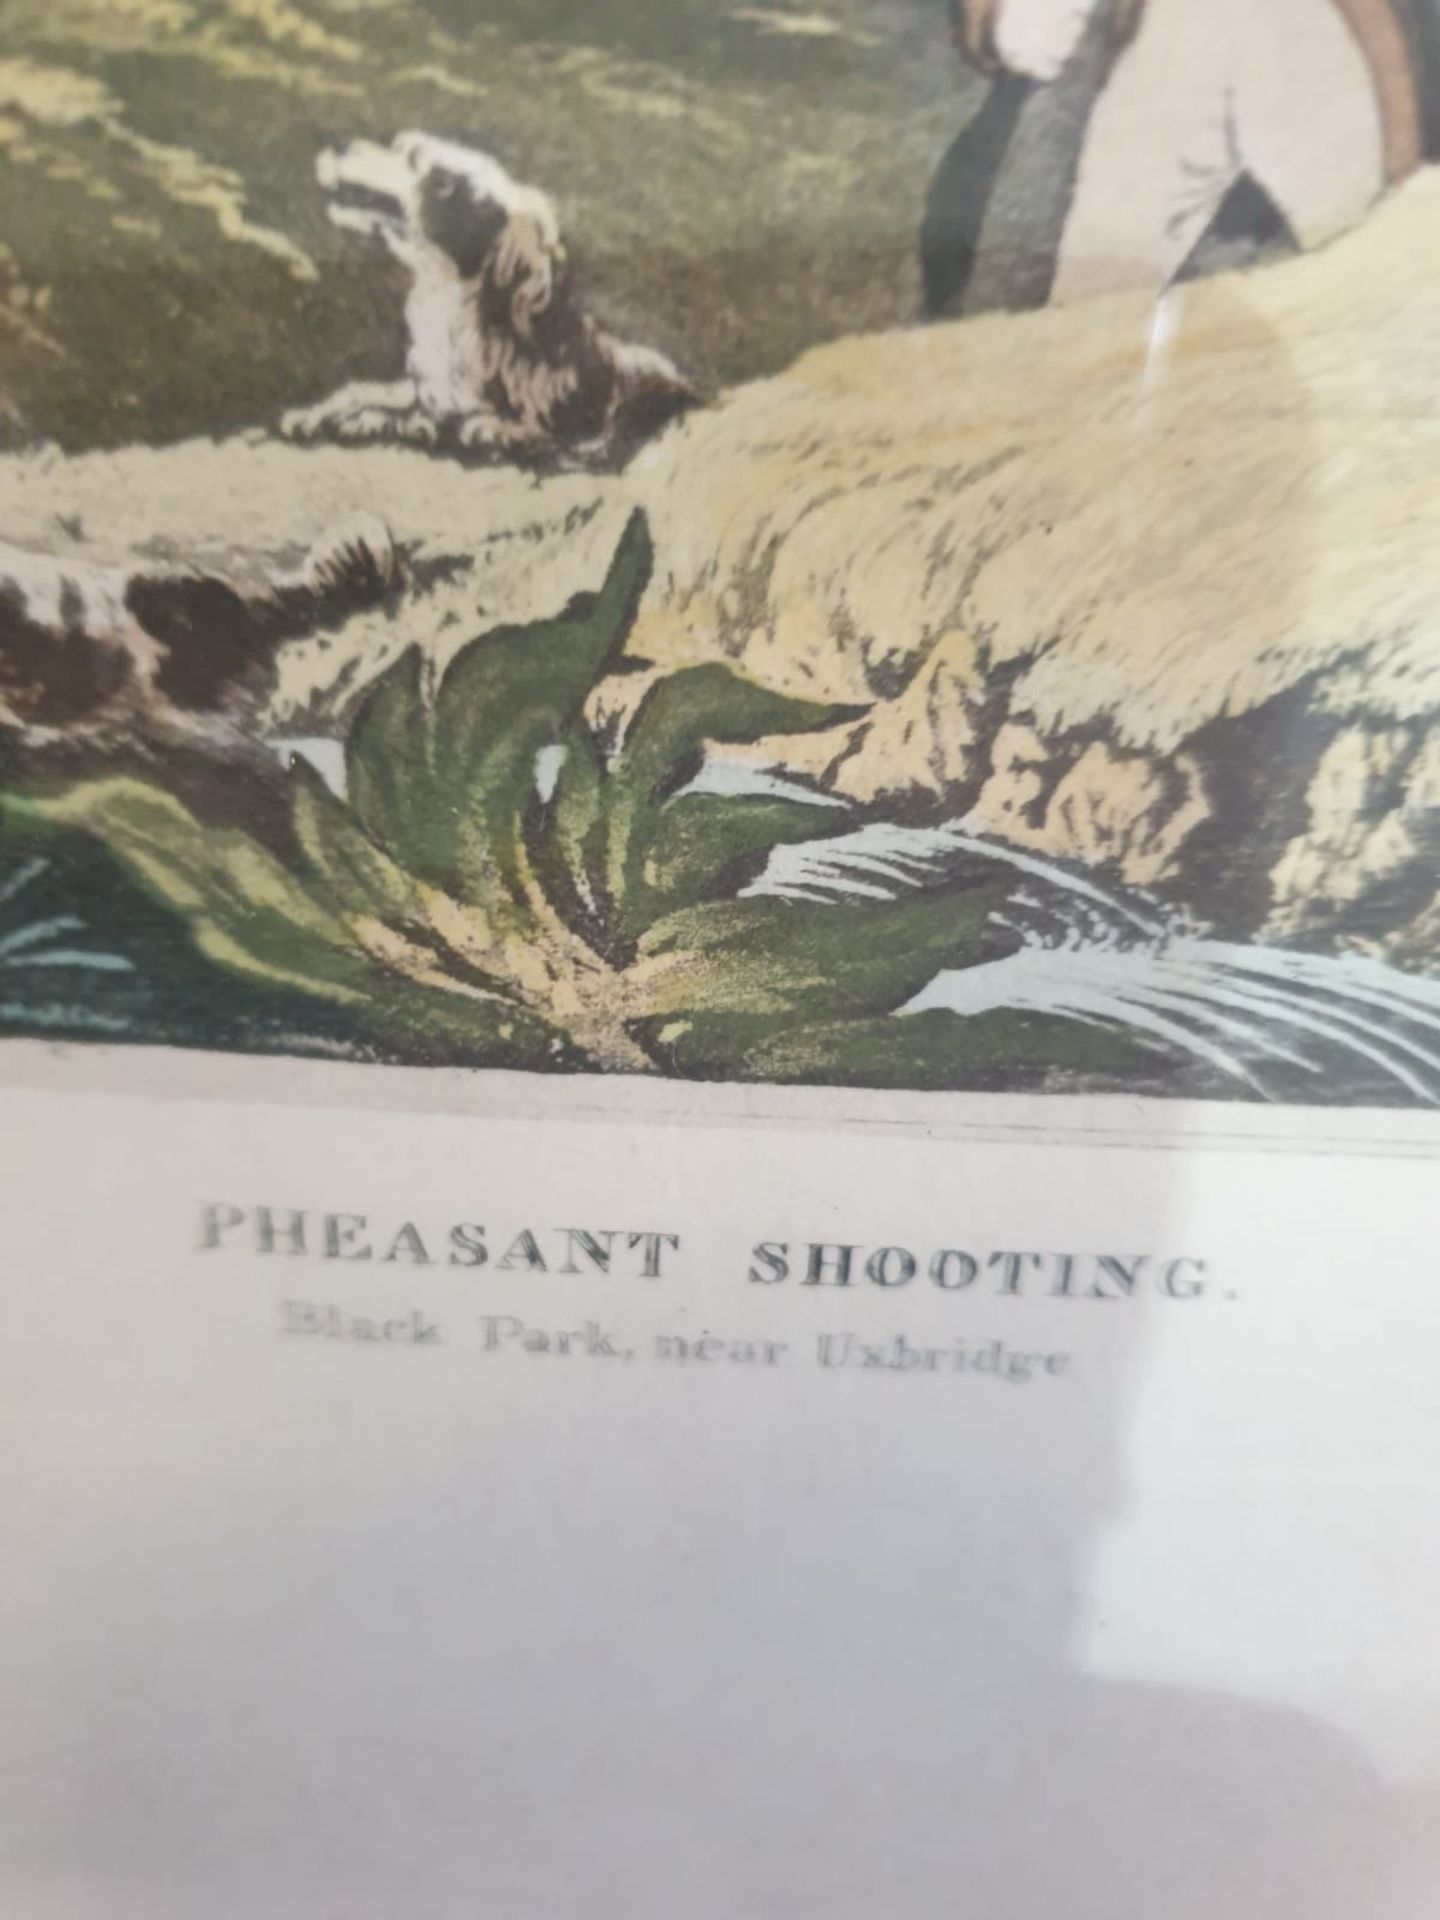 Framed vintage aquatint Pheasant Shooting. Black Park near Uxbridge. HAVELL Jr., Robert. - Image 6 of 6